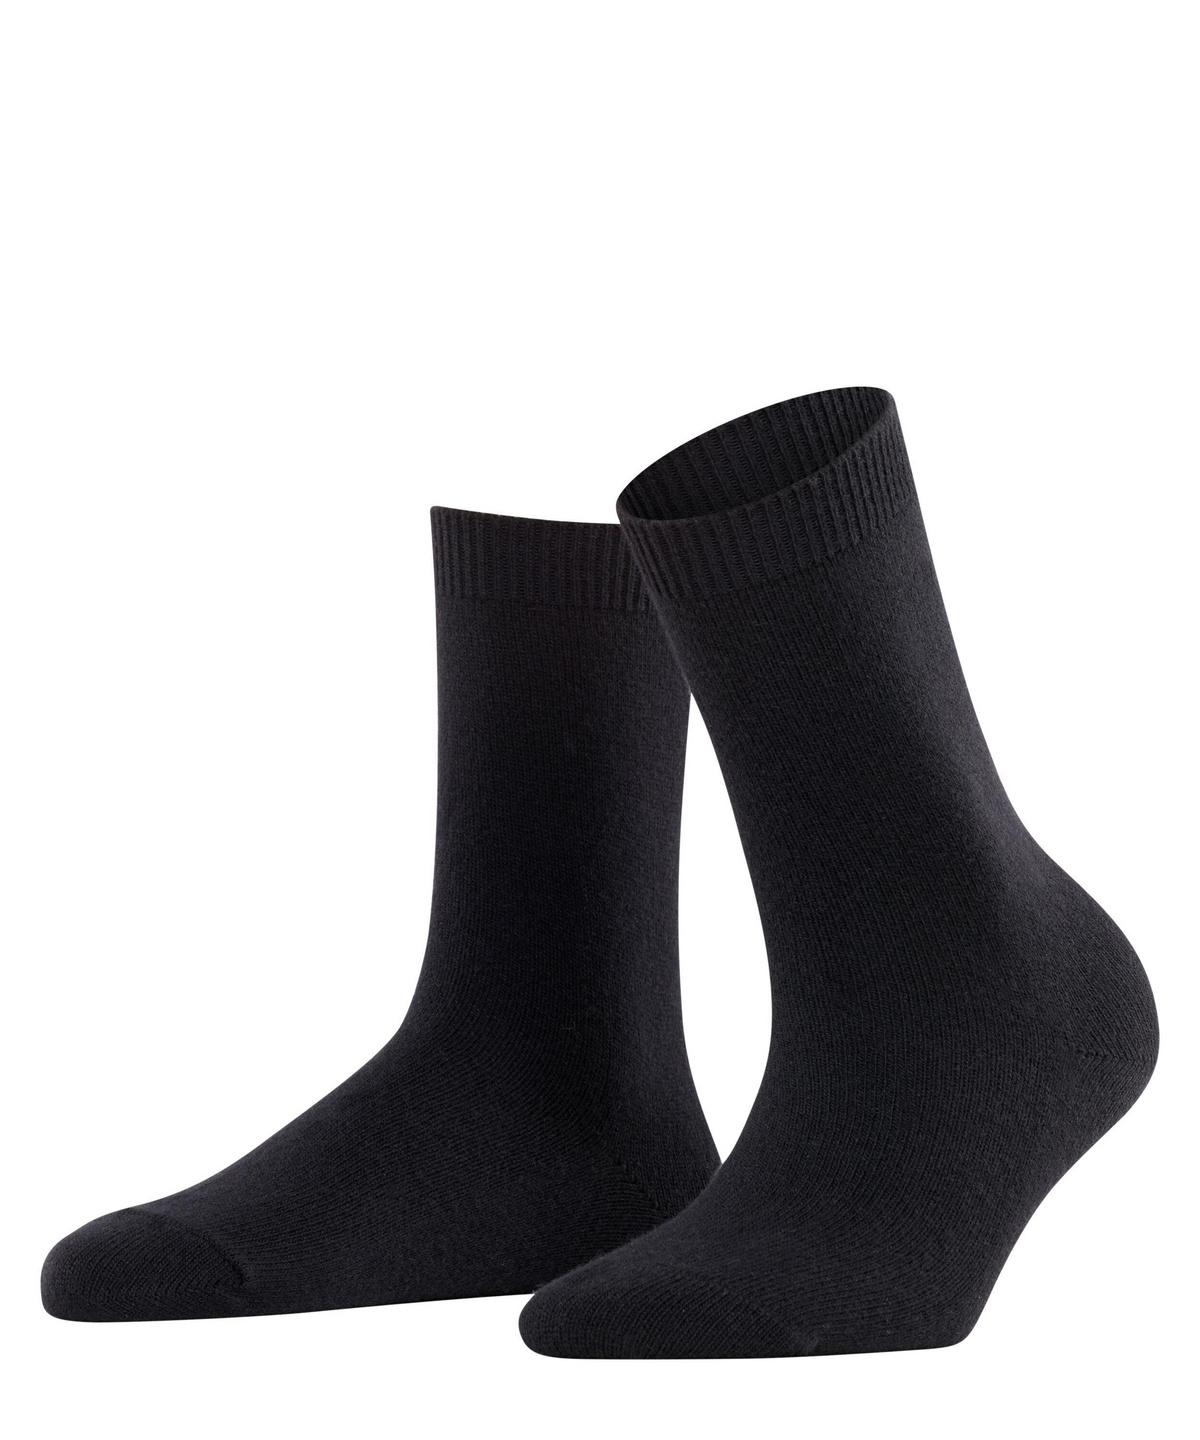 6/8/2019 FALKE Womens Cosy Wool Calf Socks, Crystal Blue 6406 size: 39-42